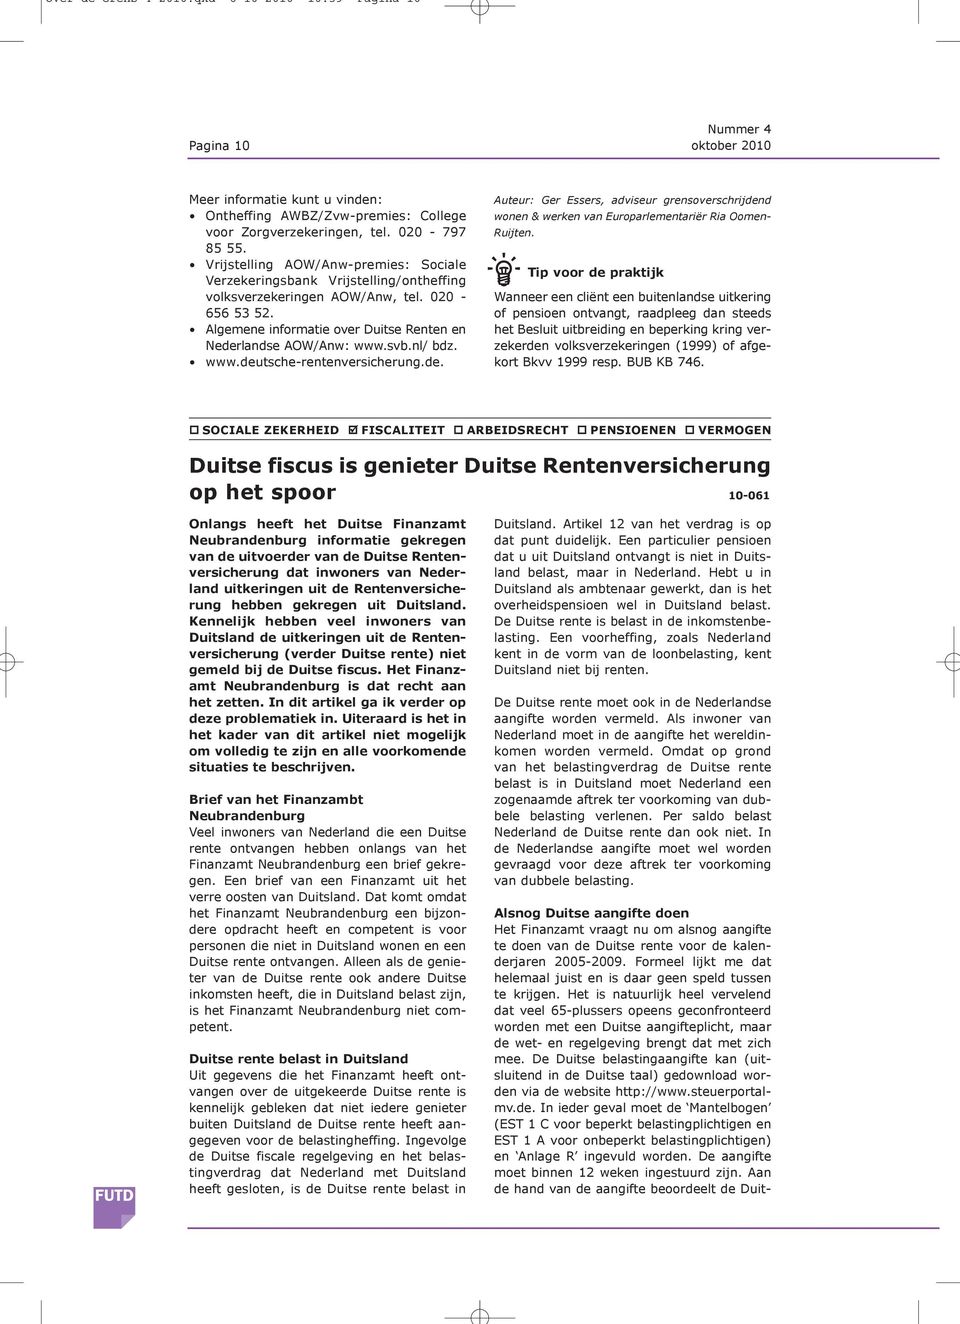 nl/ bdz. www.deutsche-rentenversicherung.de. Auteur: Ger Essers, adviseur grensoverschrijdend wonen & werken van Europarlementariër Ria Oomen- Ruijten.